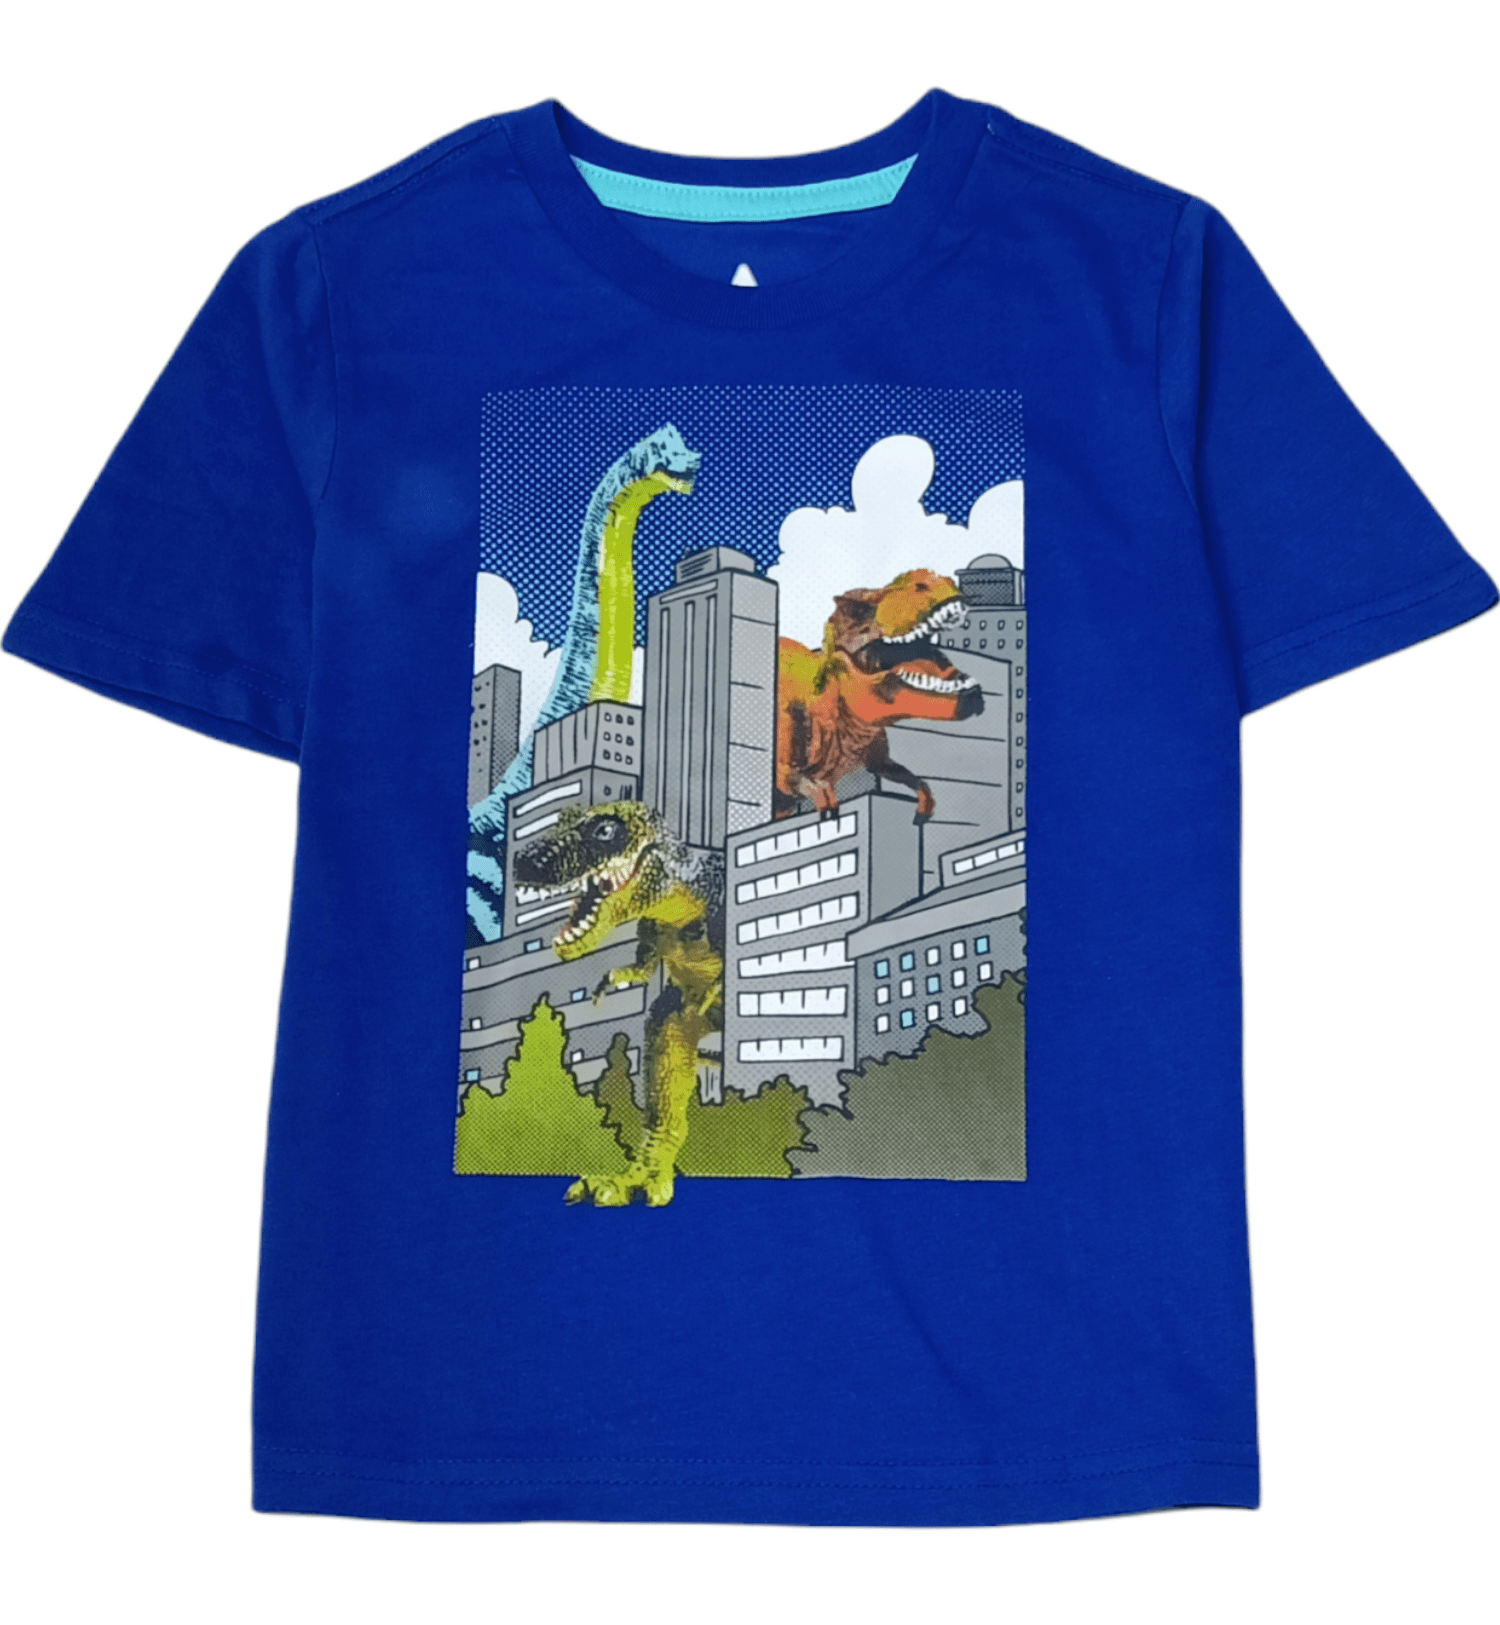 ElOutlet-Sumer Kids Kids Tshirt Boys Tshirt - 365 Kids - Blue - Dinosaur